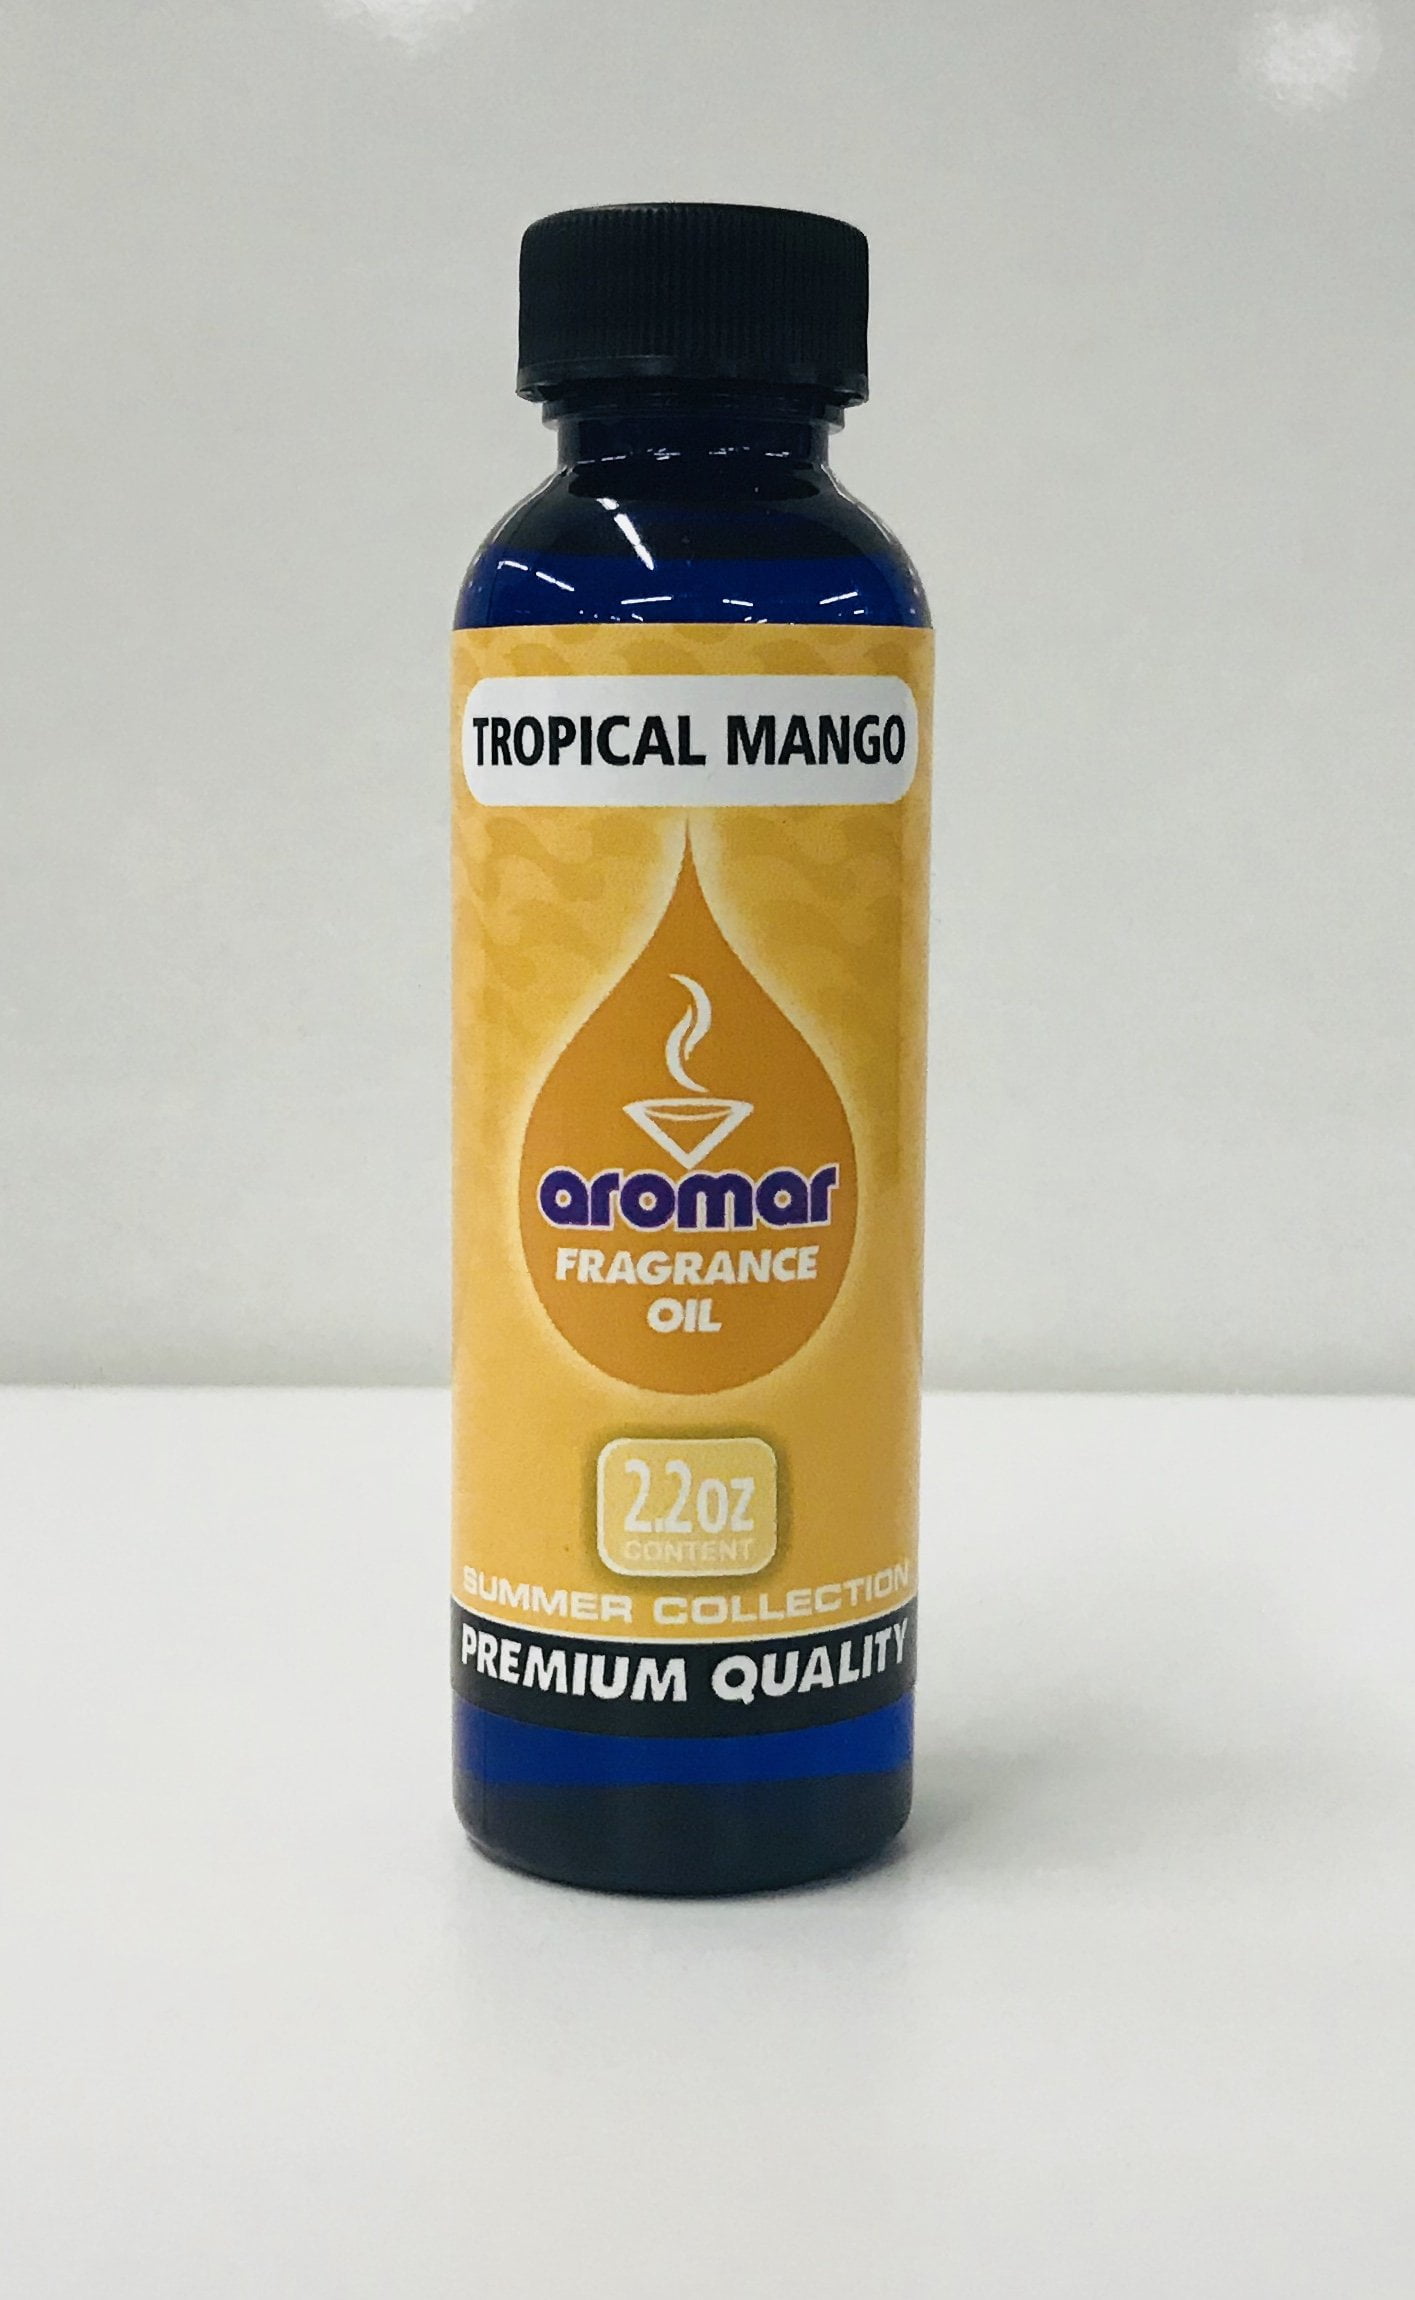 Aromar Essential Aromatic Oil Strawberry Melon fragrance 2.2 OZ